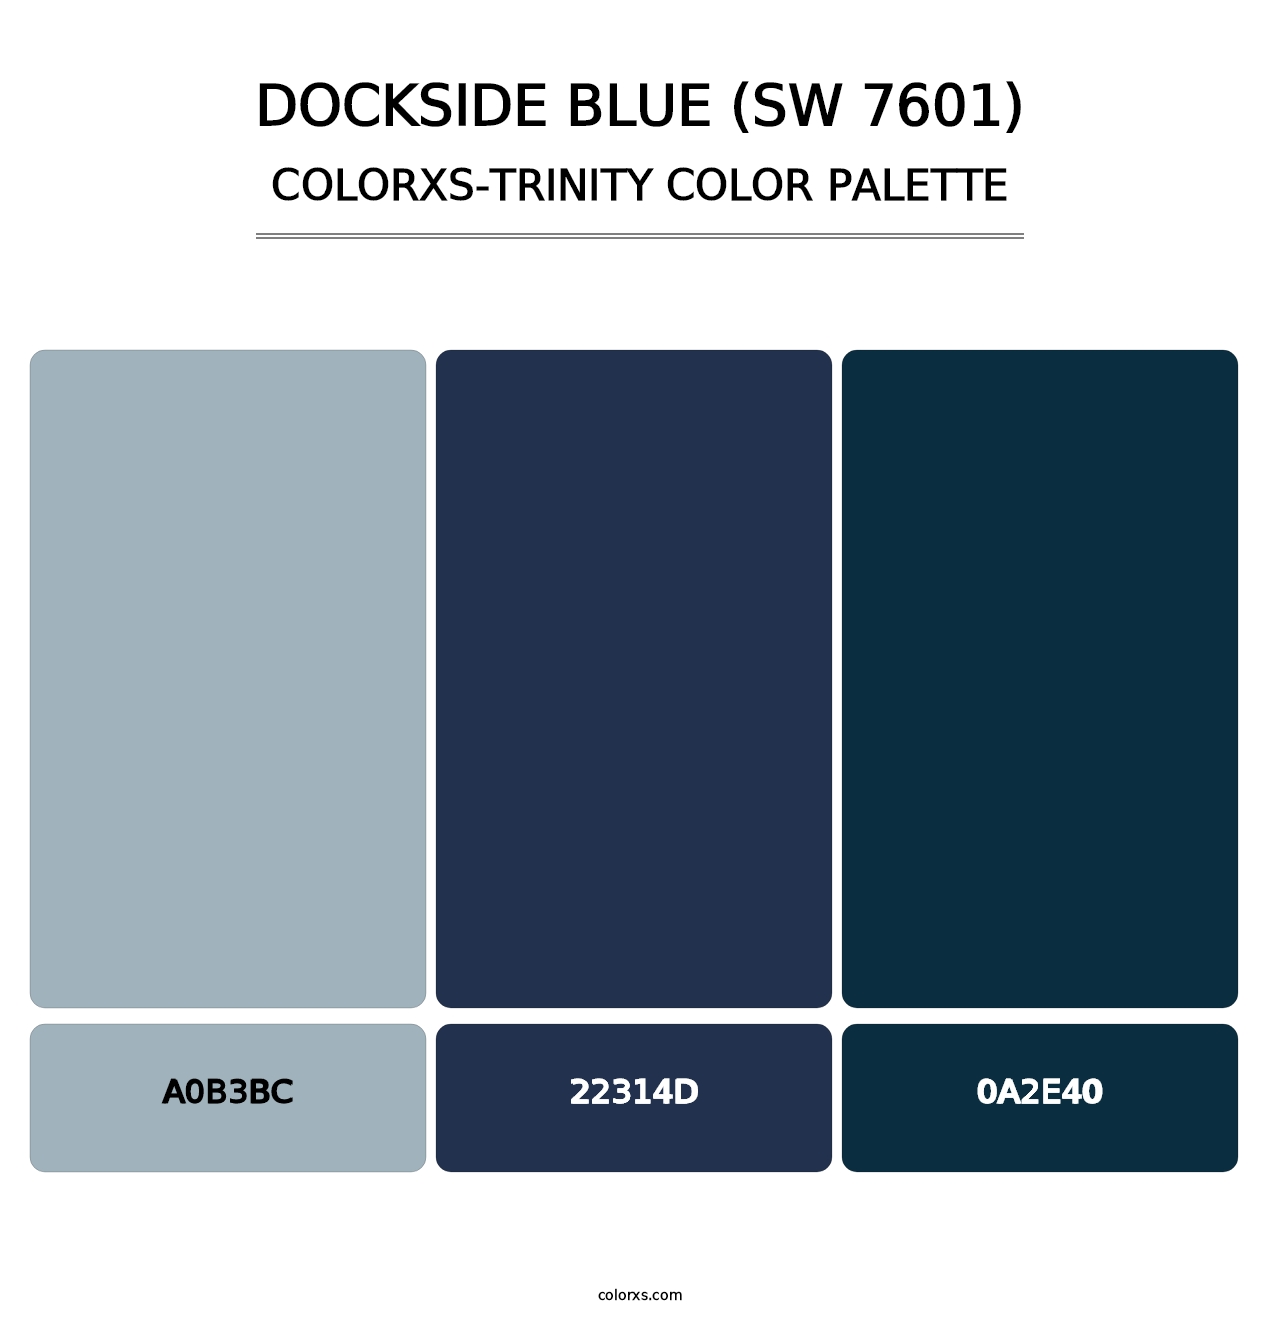 Dockside Blue (SW 7601) - Colorxs Trinity Palette